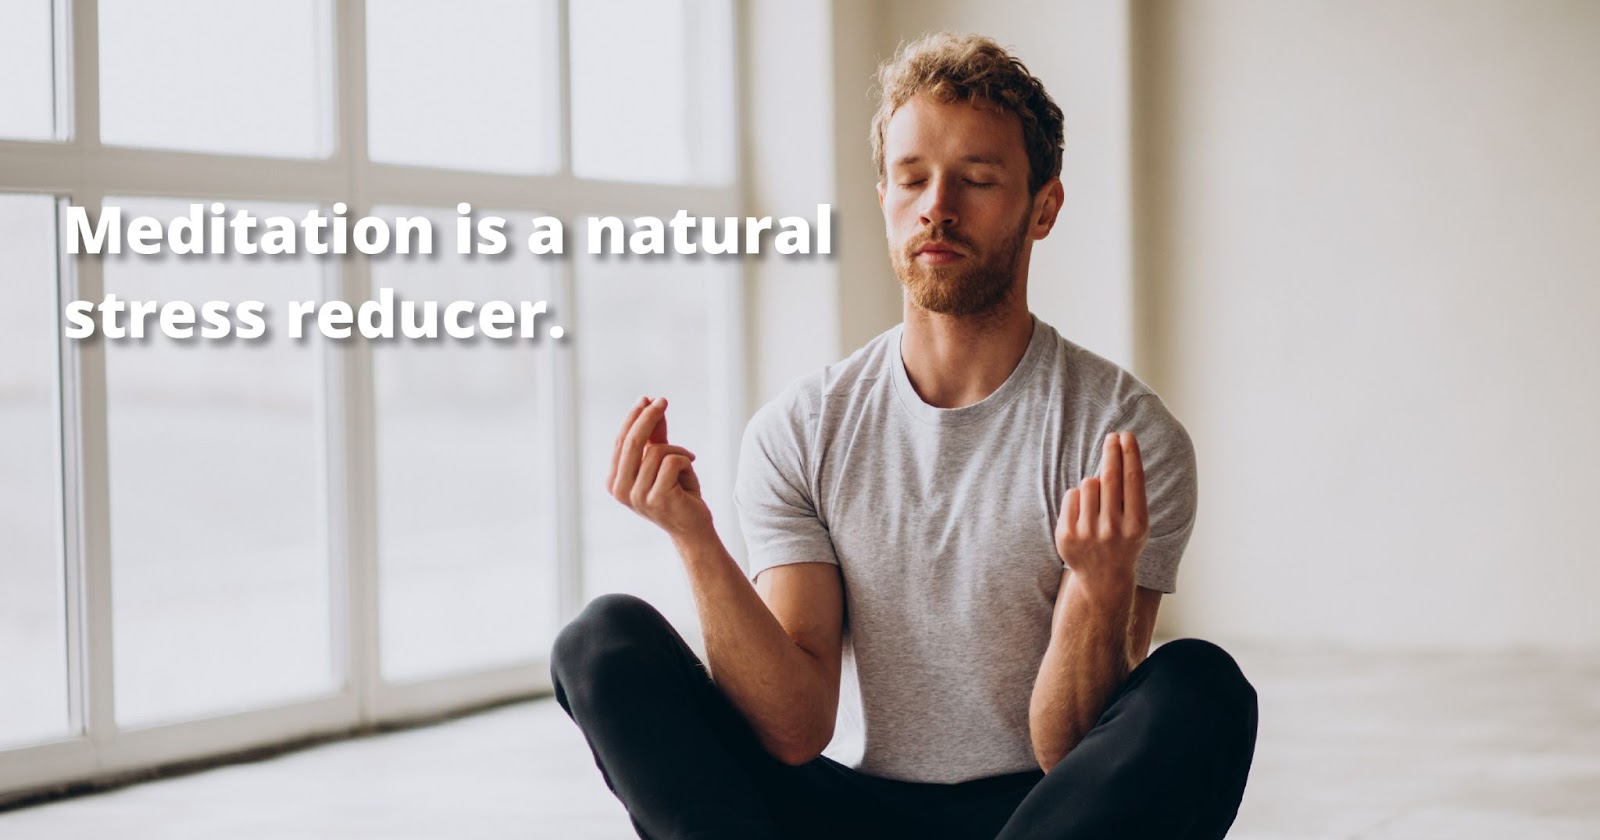 Meditation is a natural stress reducer